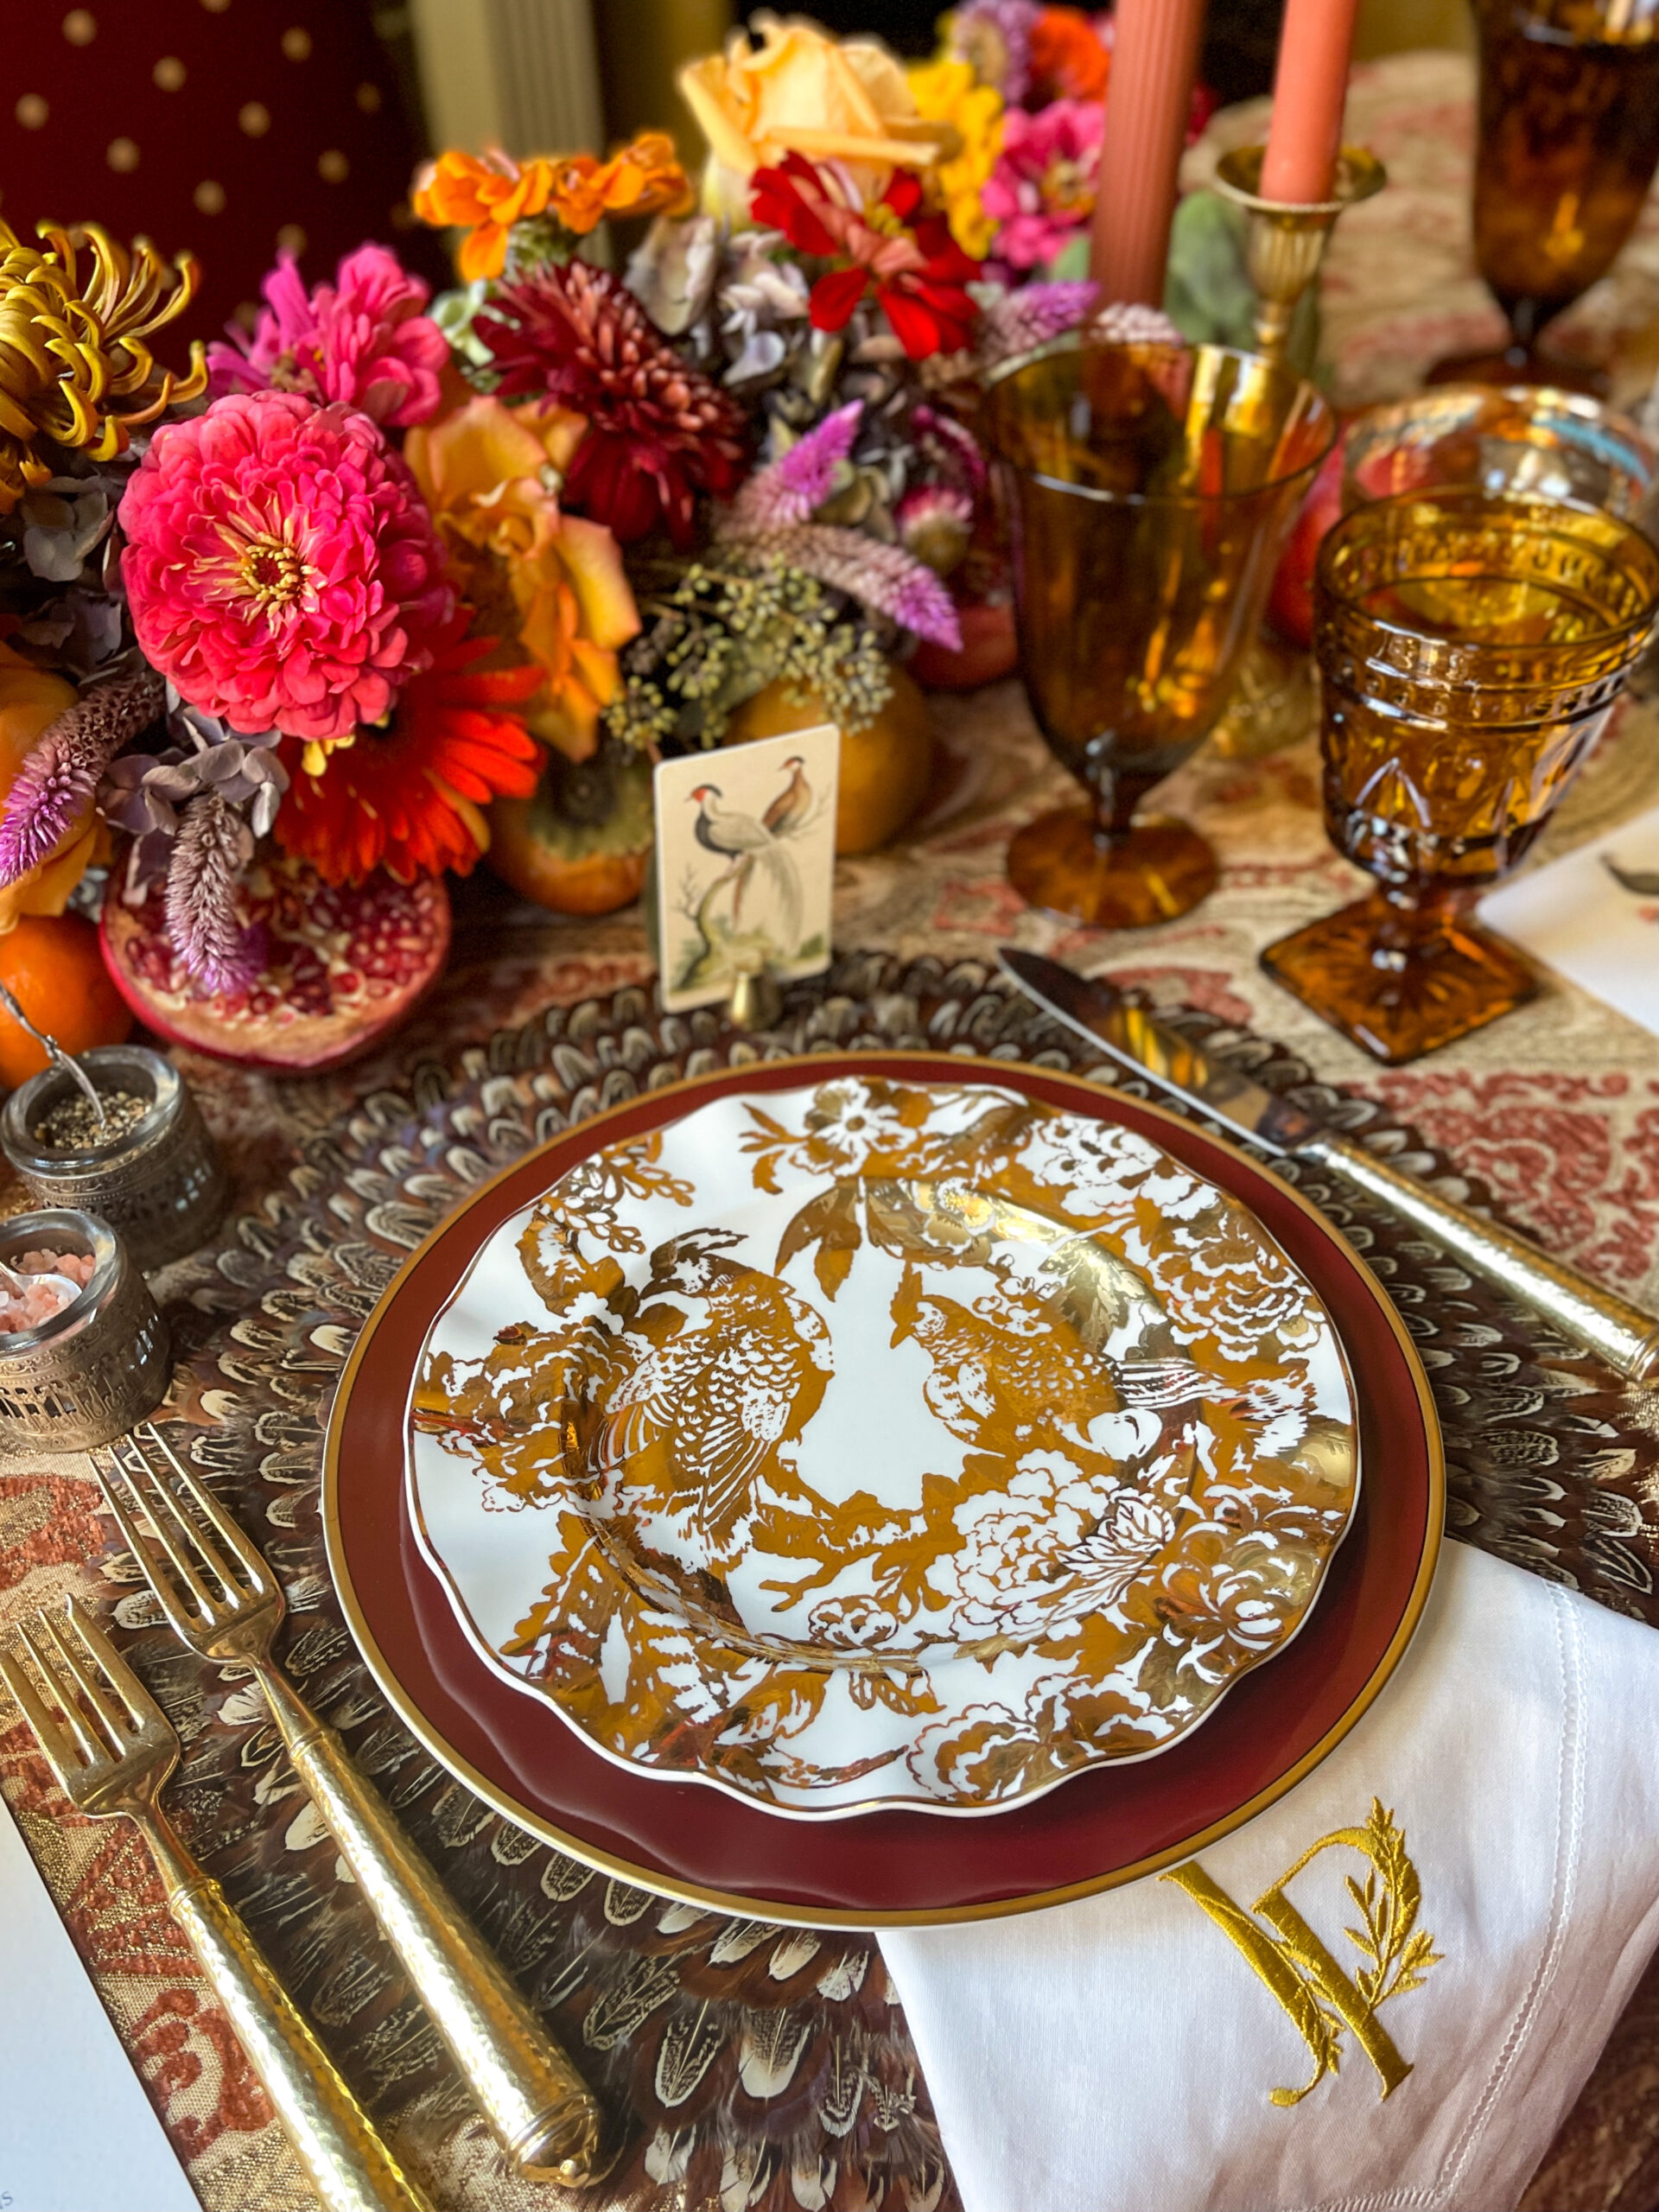 Harvest Thanksgiving table